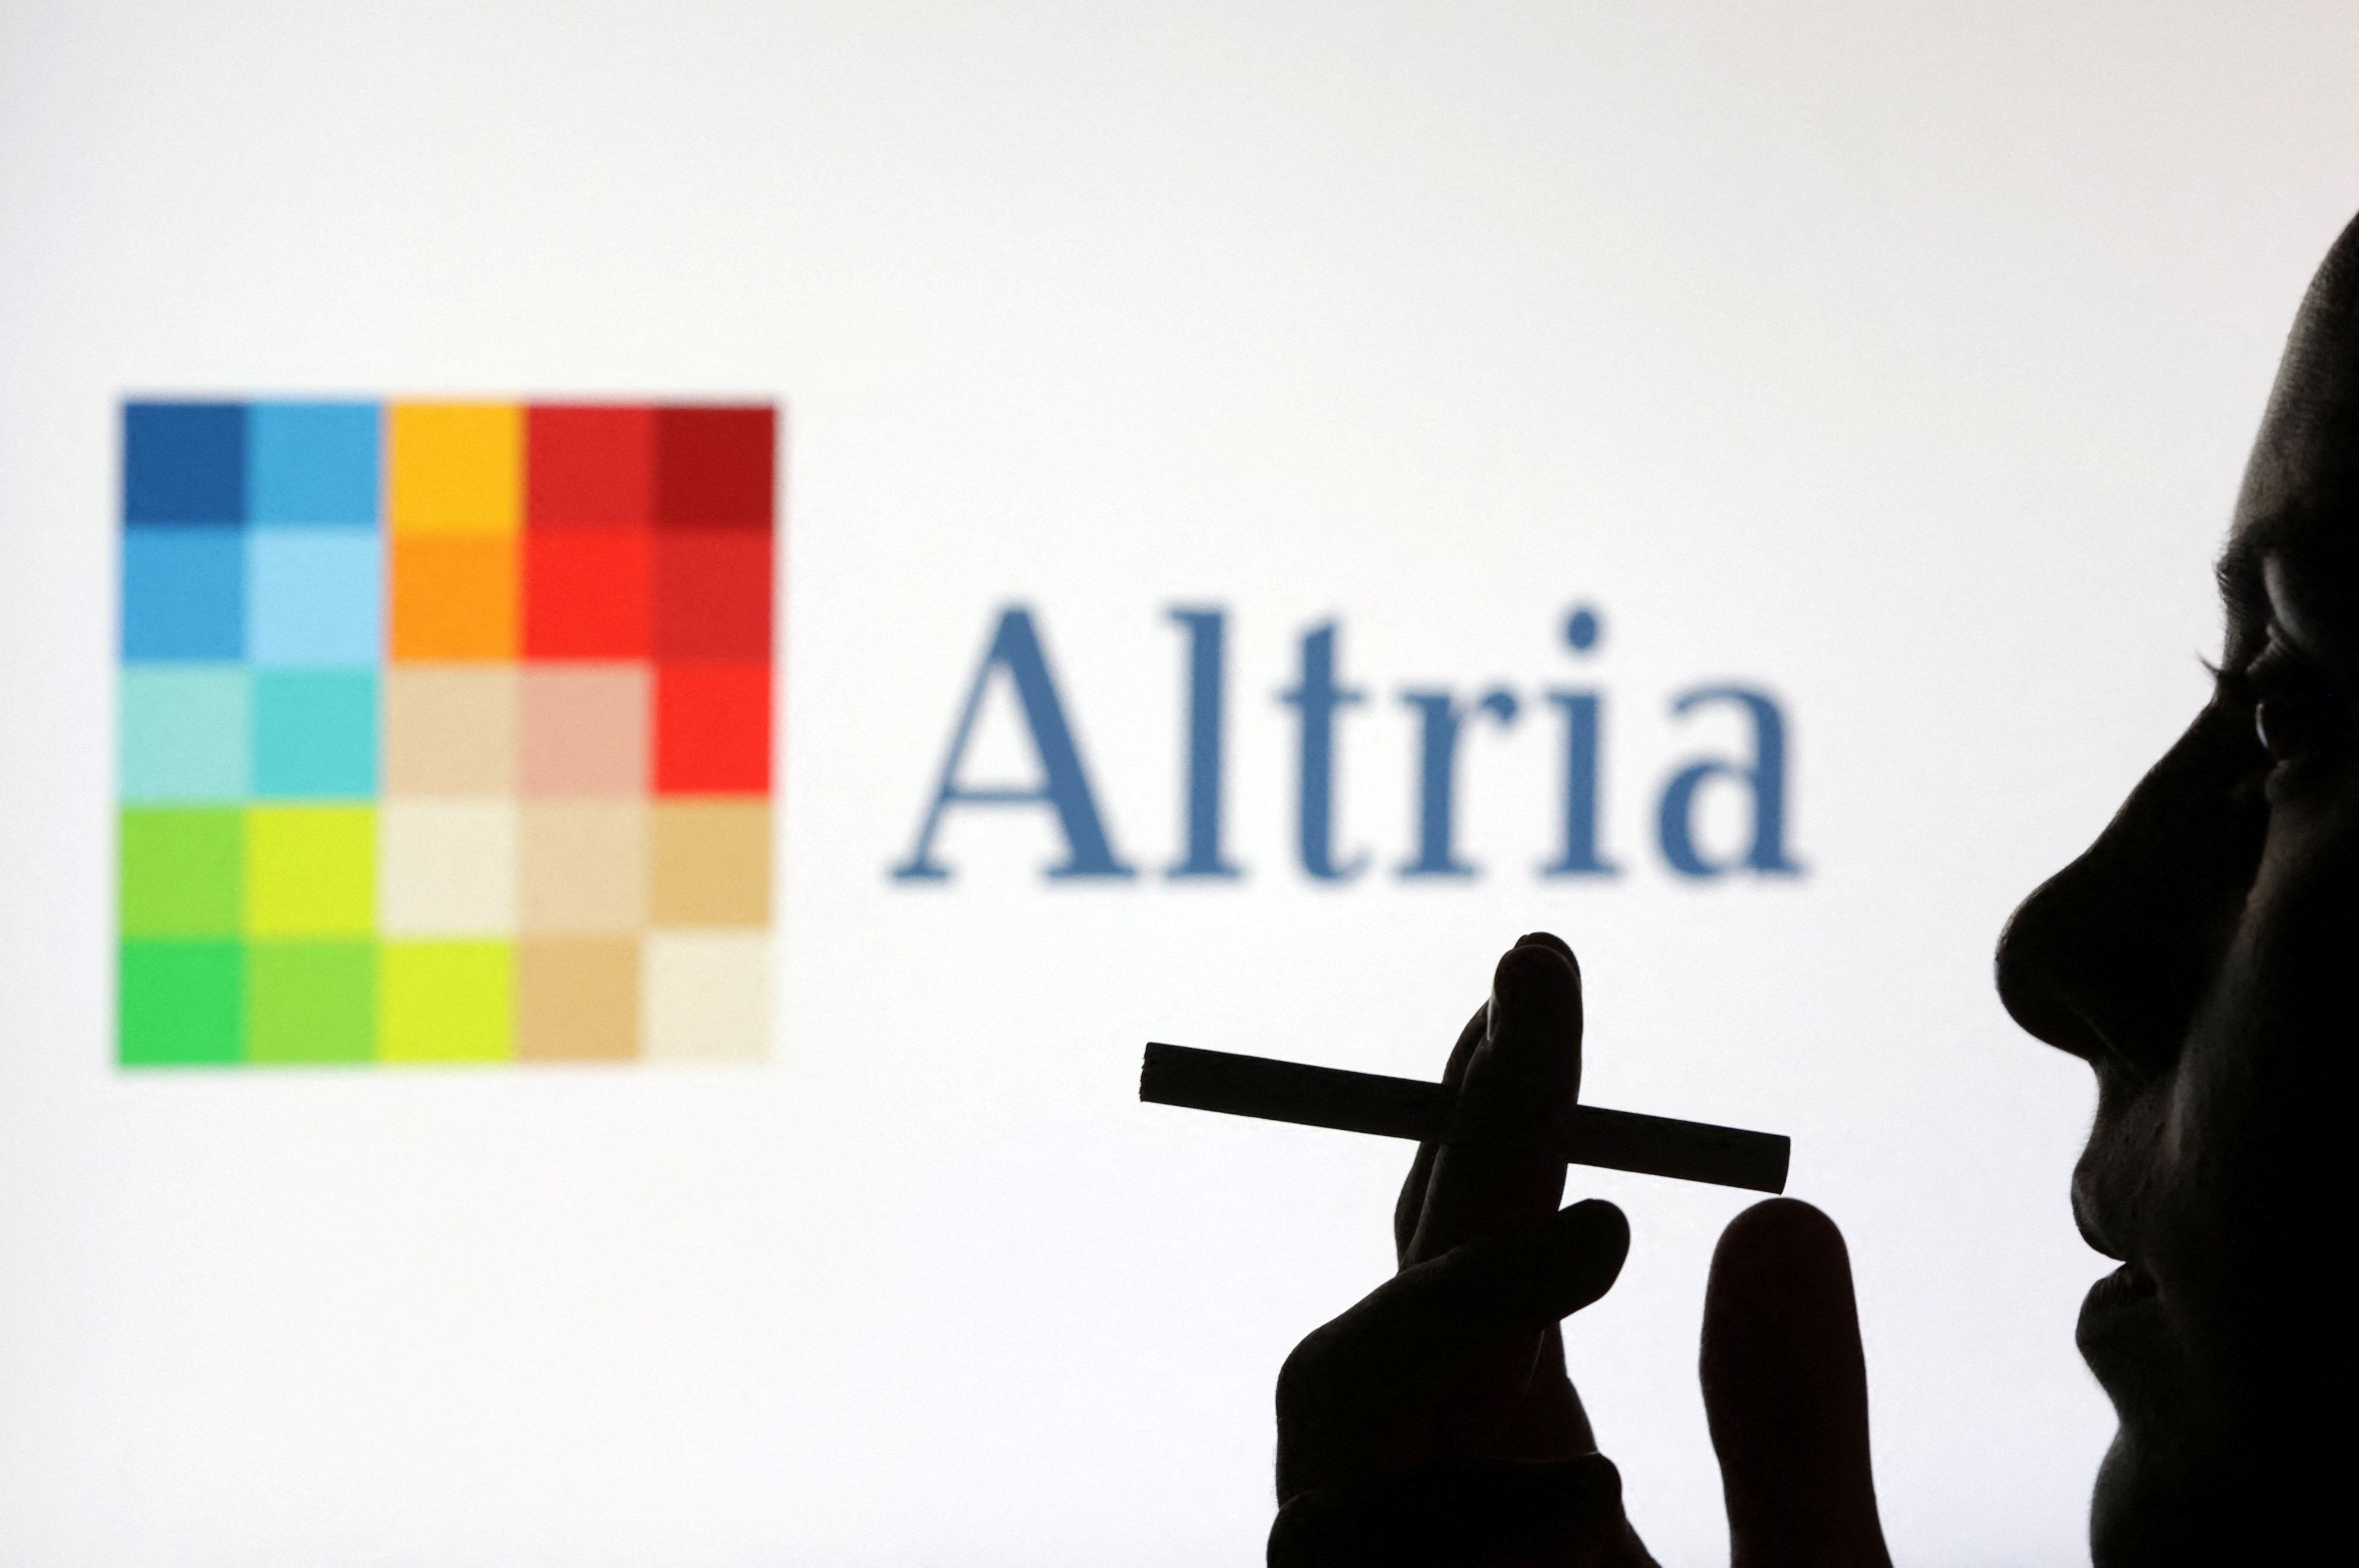 Illustration shows Altria logo